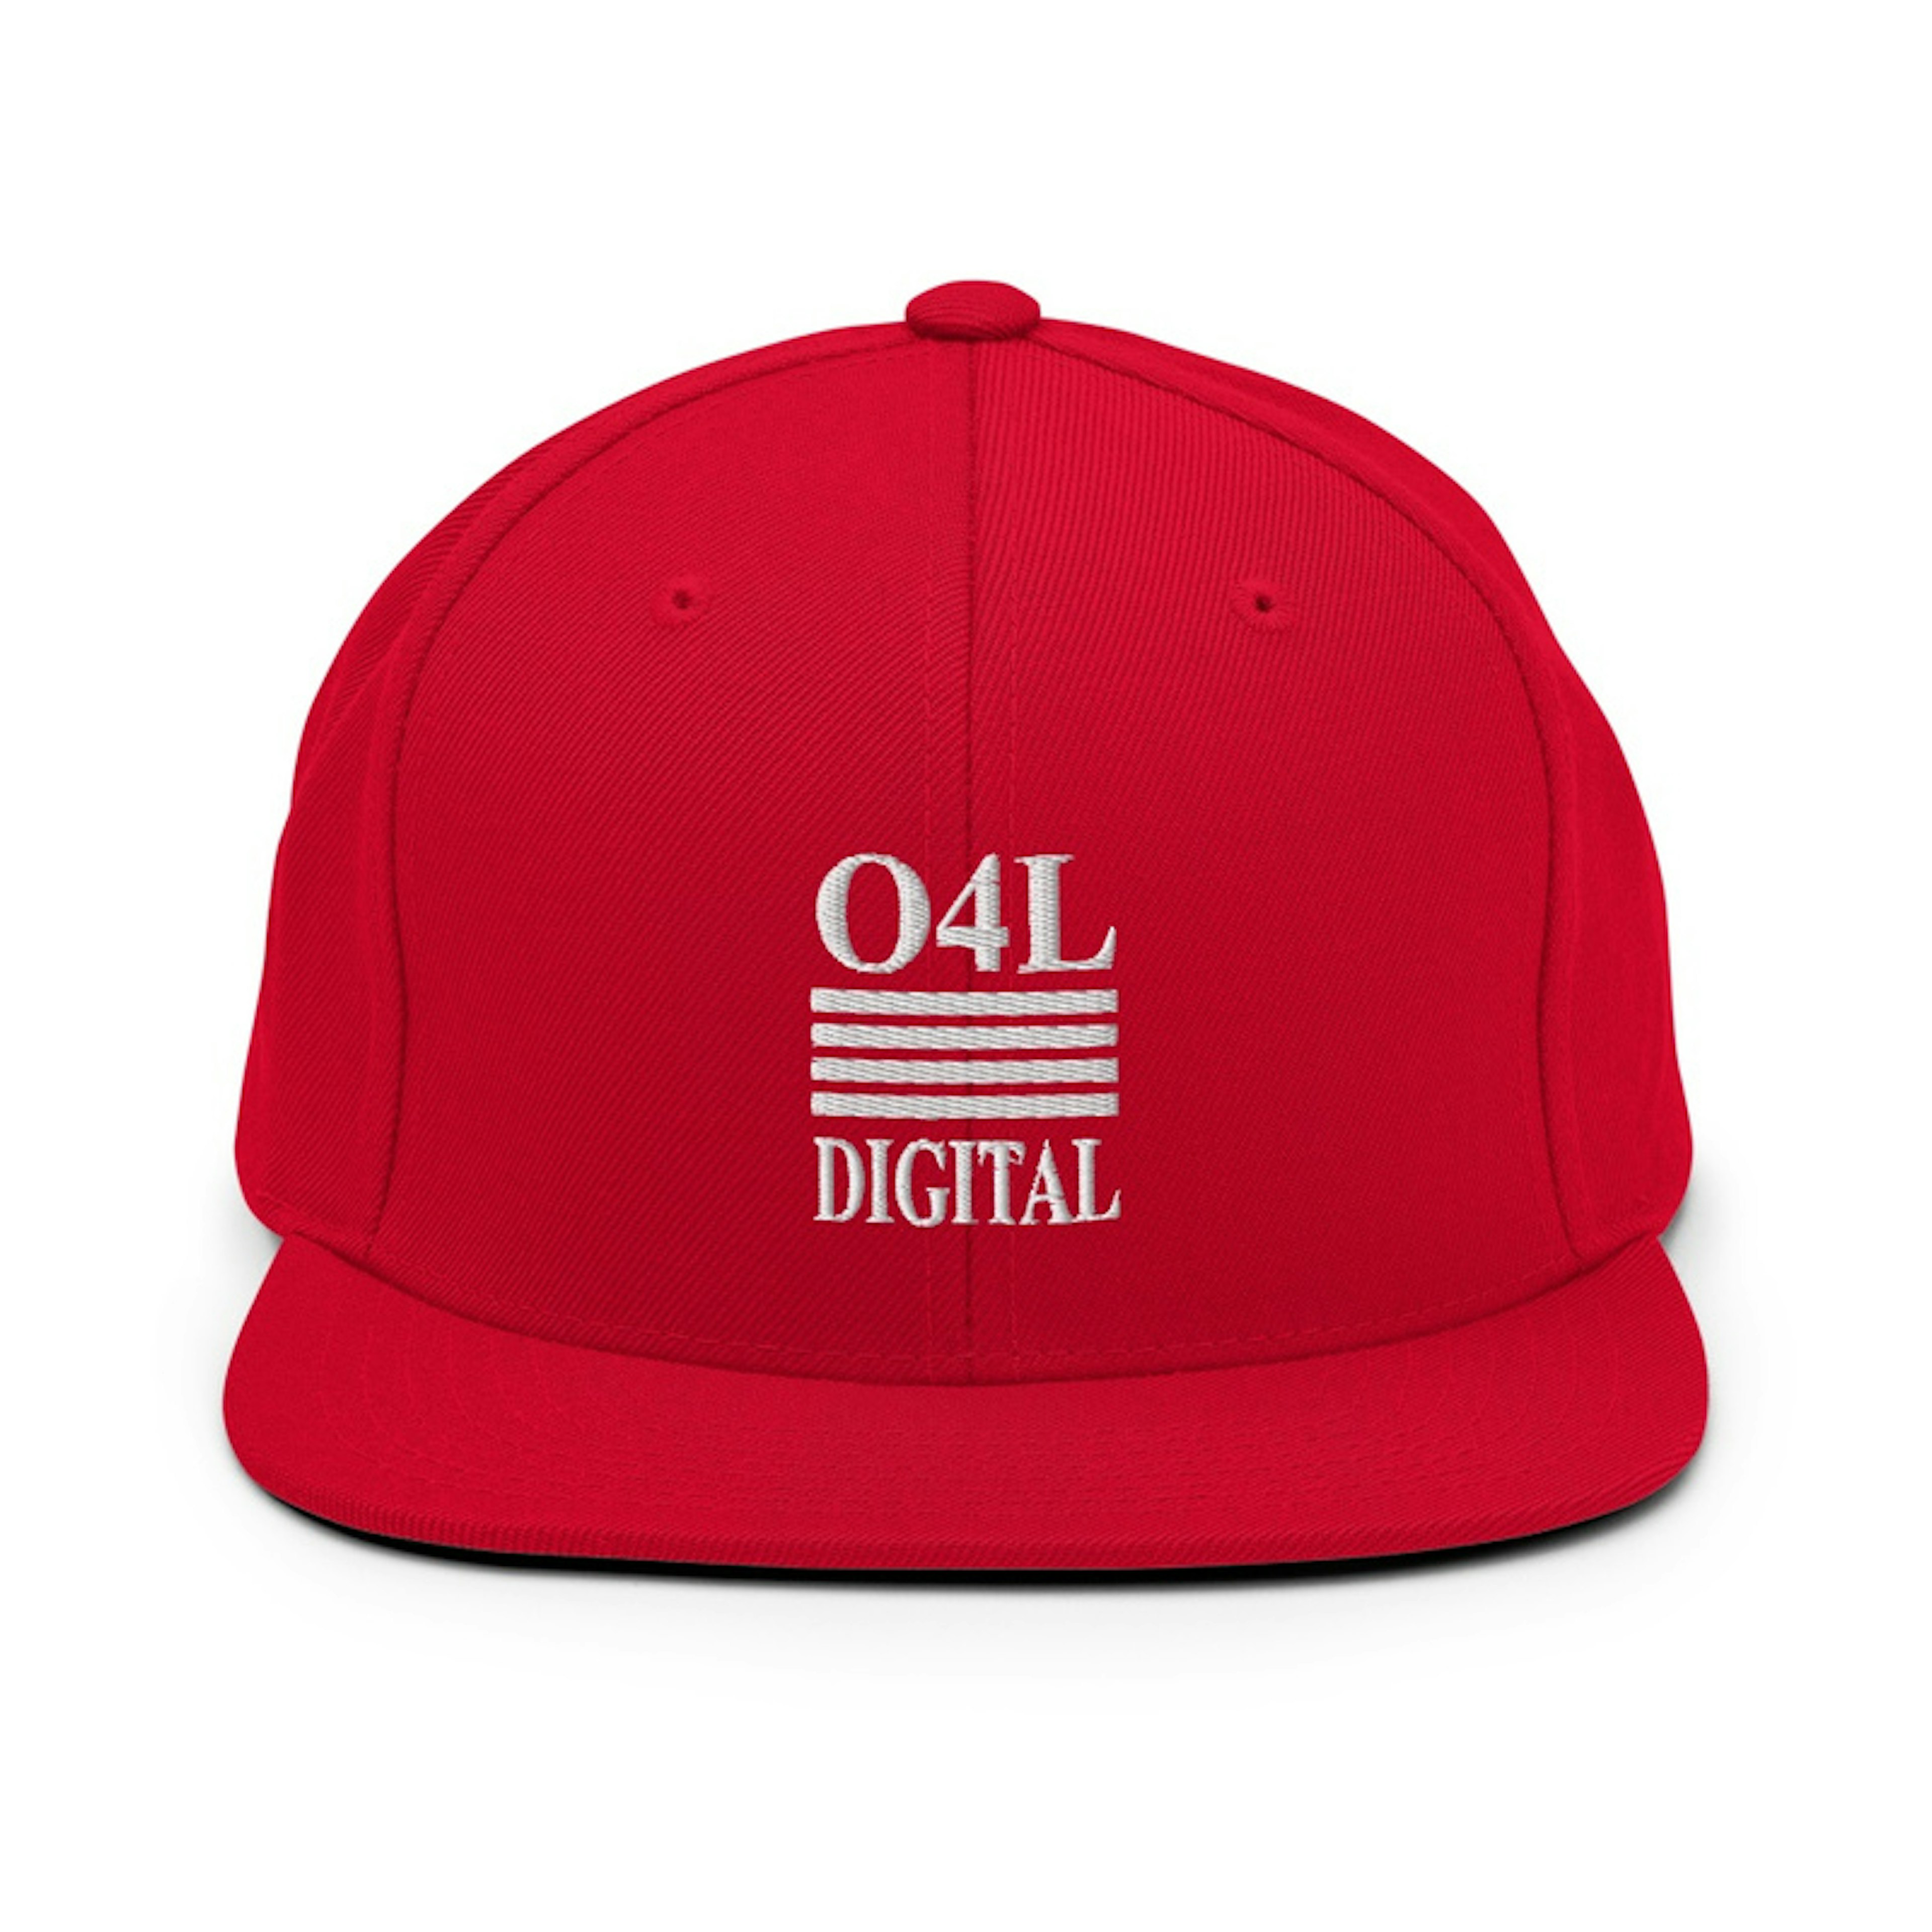 O4L Digital - Snapback - Red